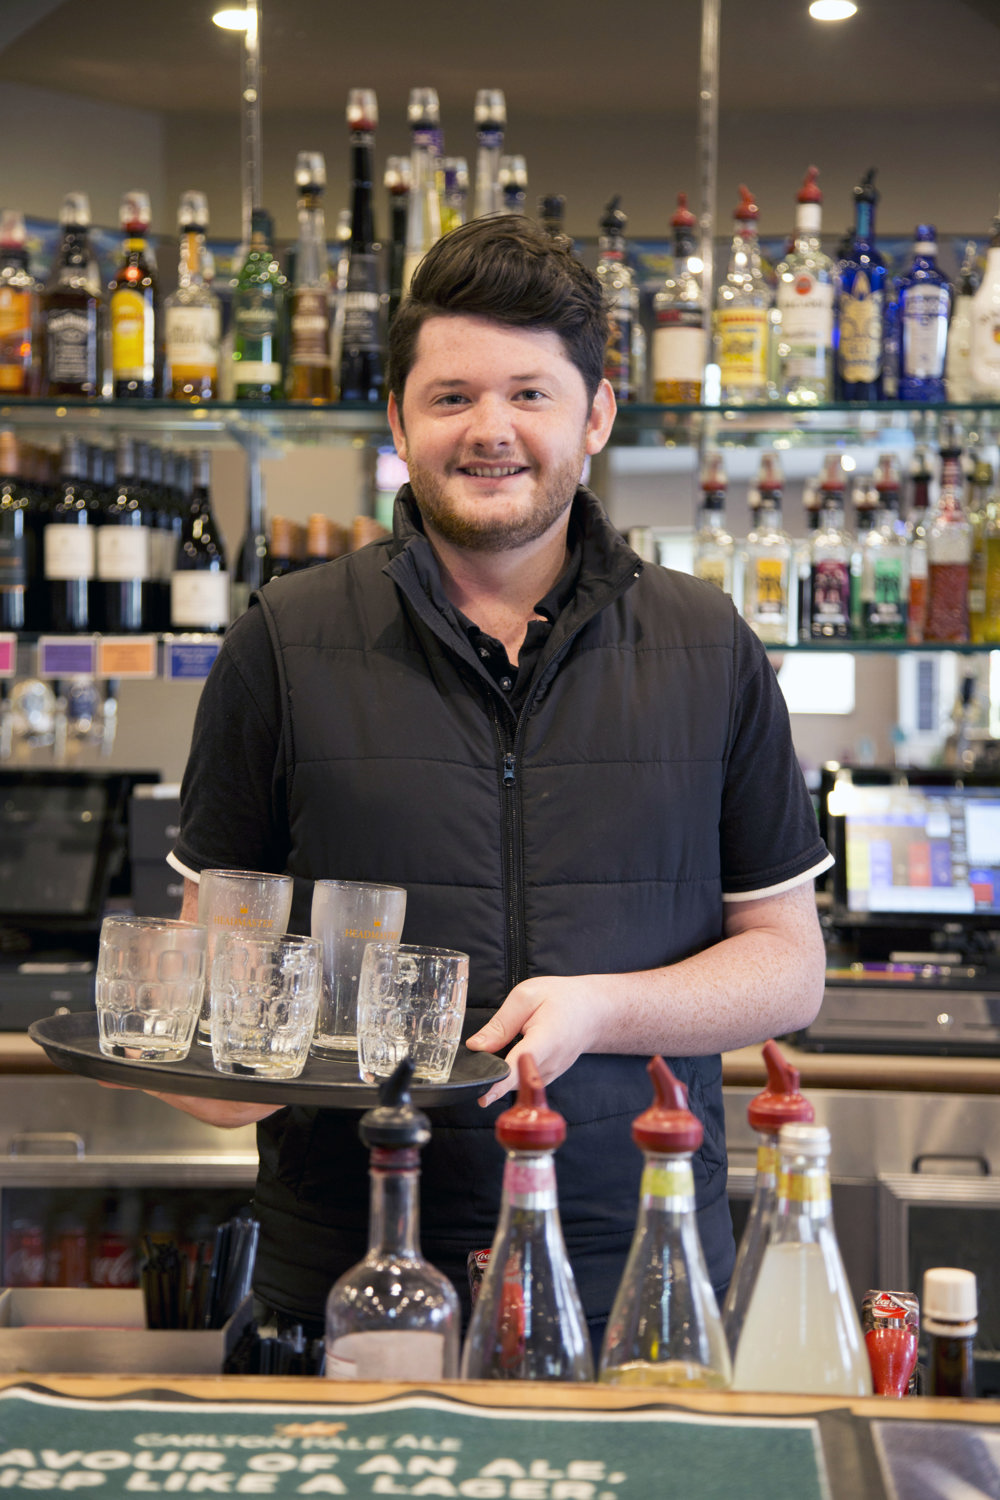 James working as a bar tender